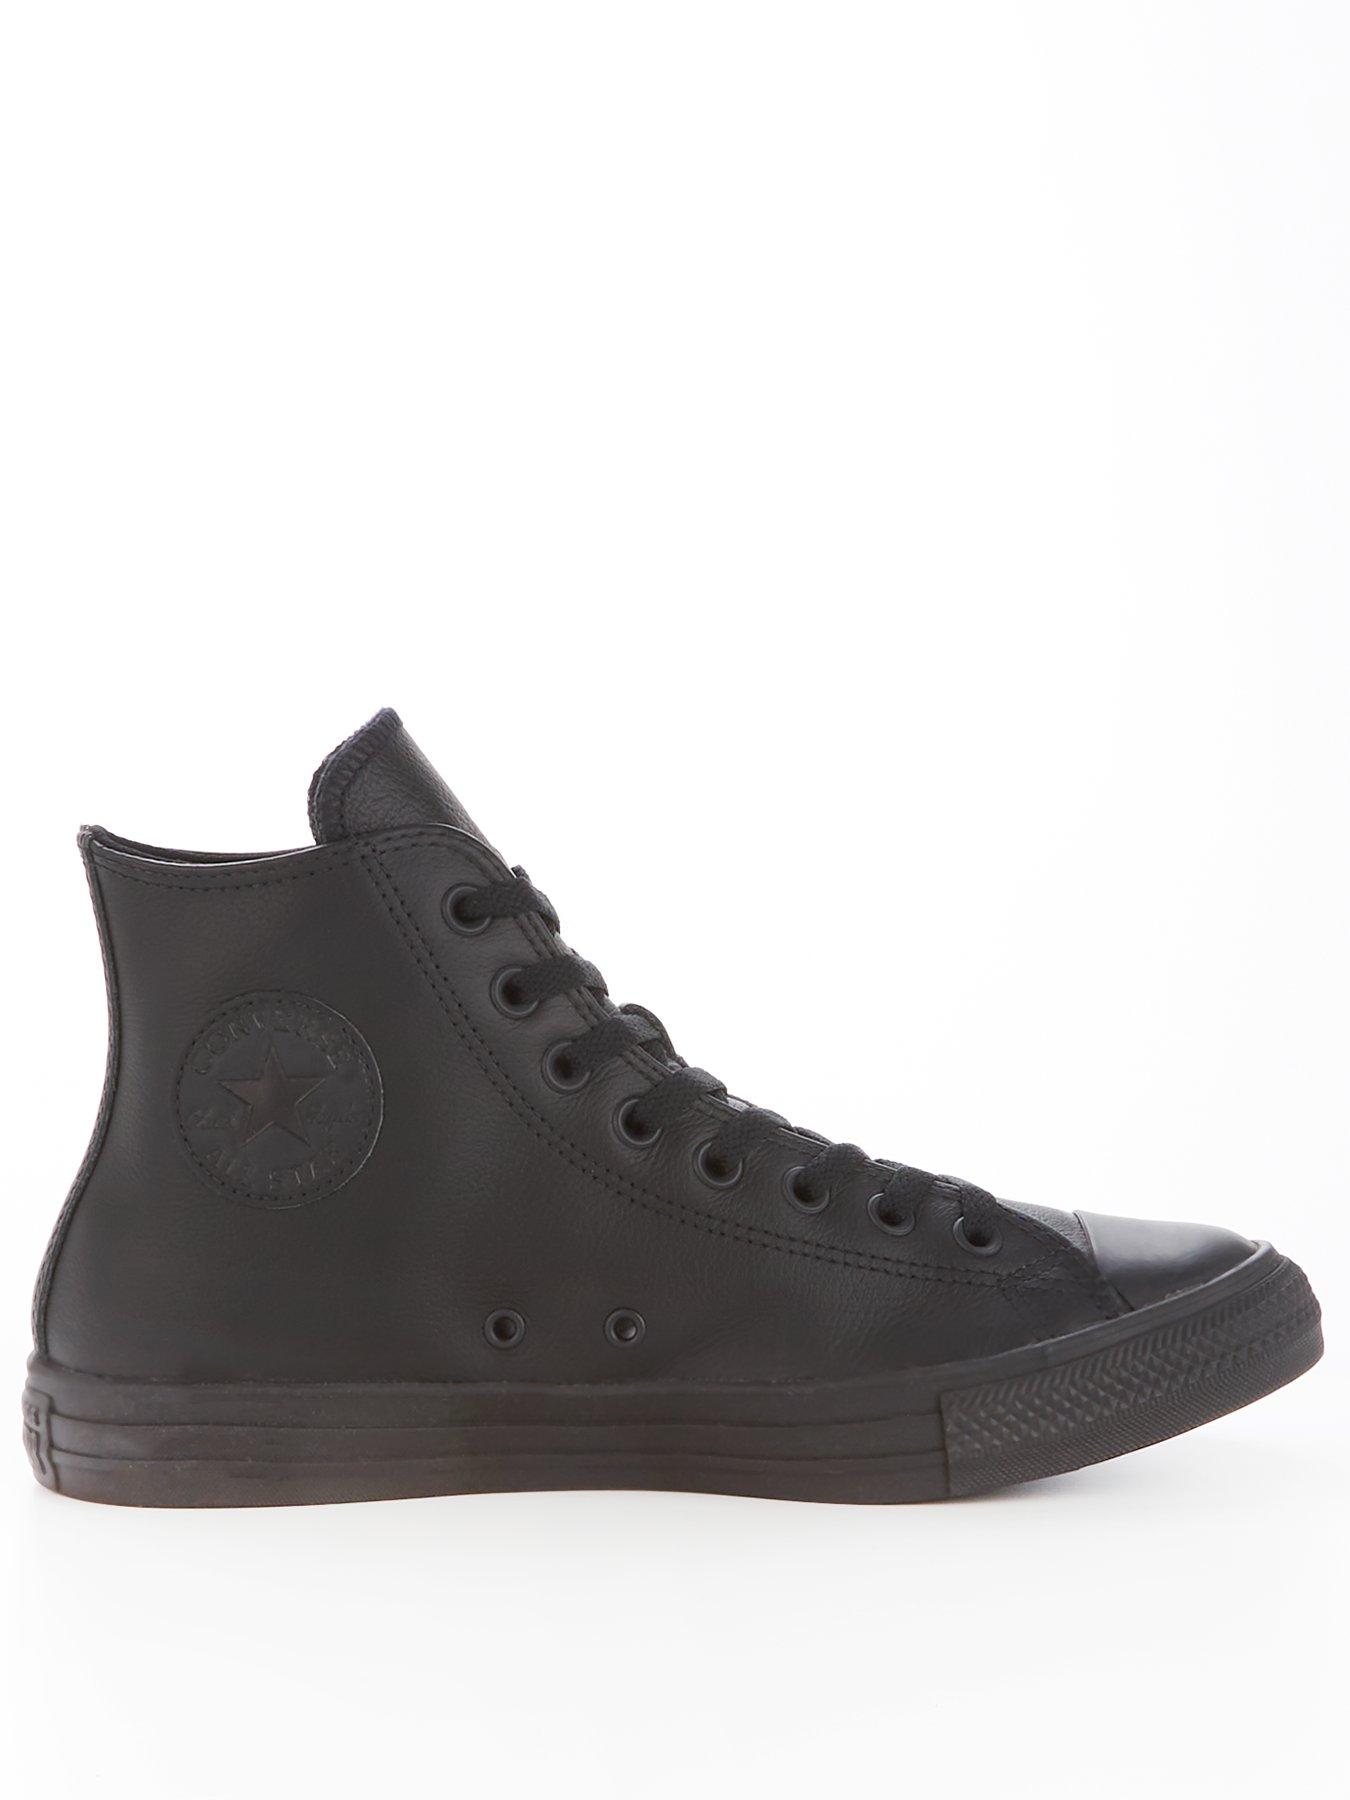 converse leather black size 6